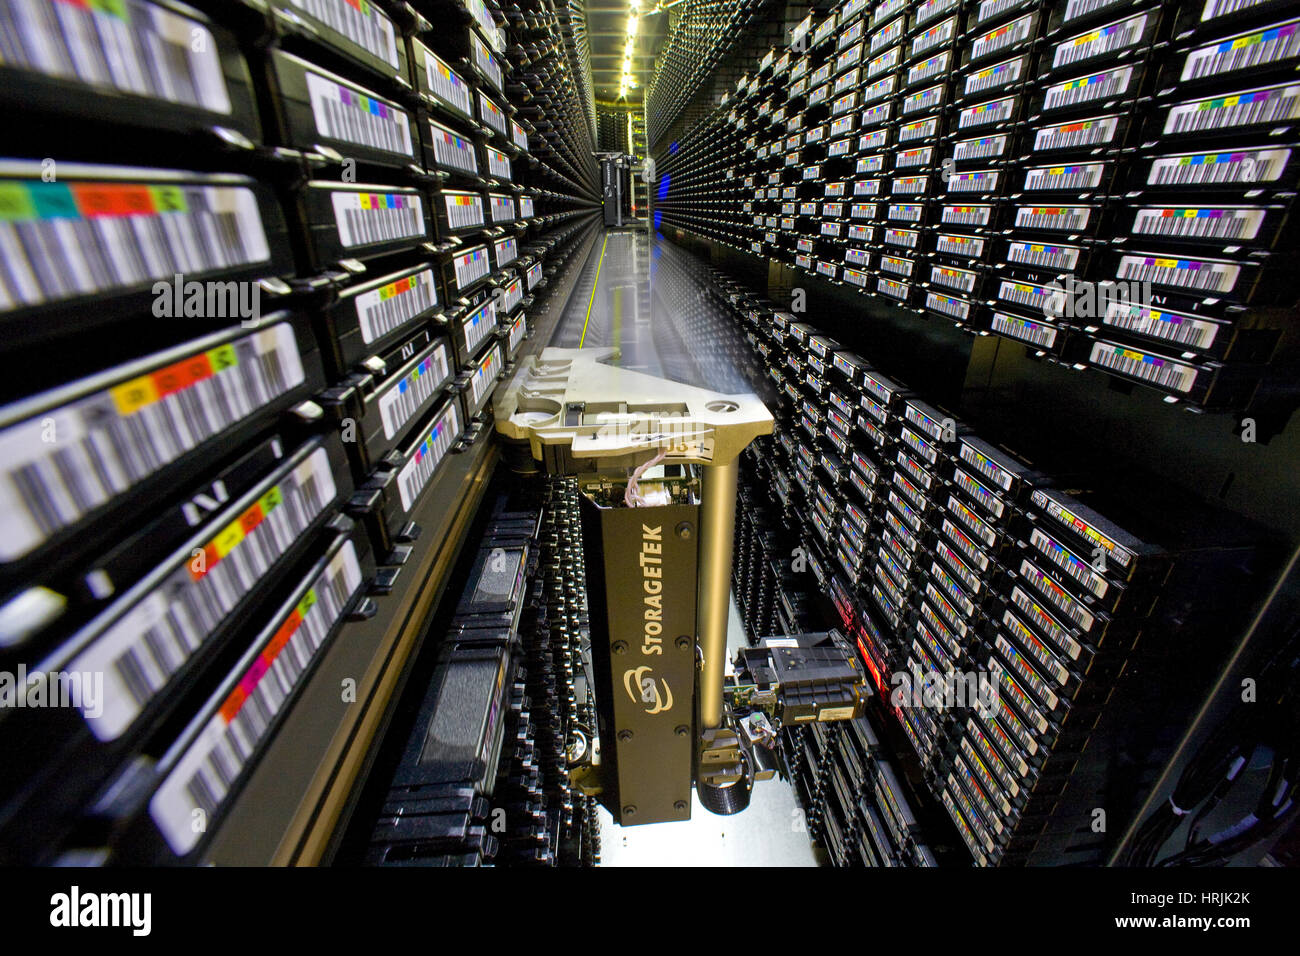 StorageTek Robotic Tape Storage Stock Photo - Alamy